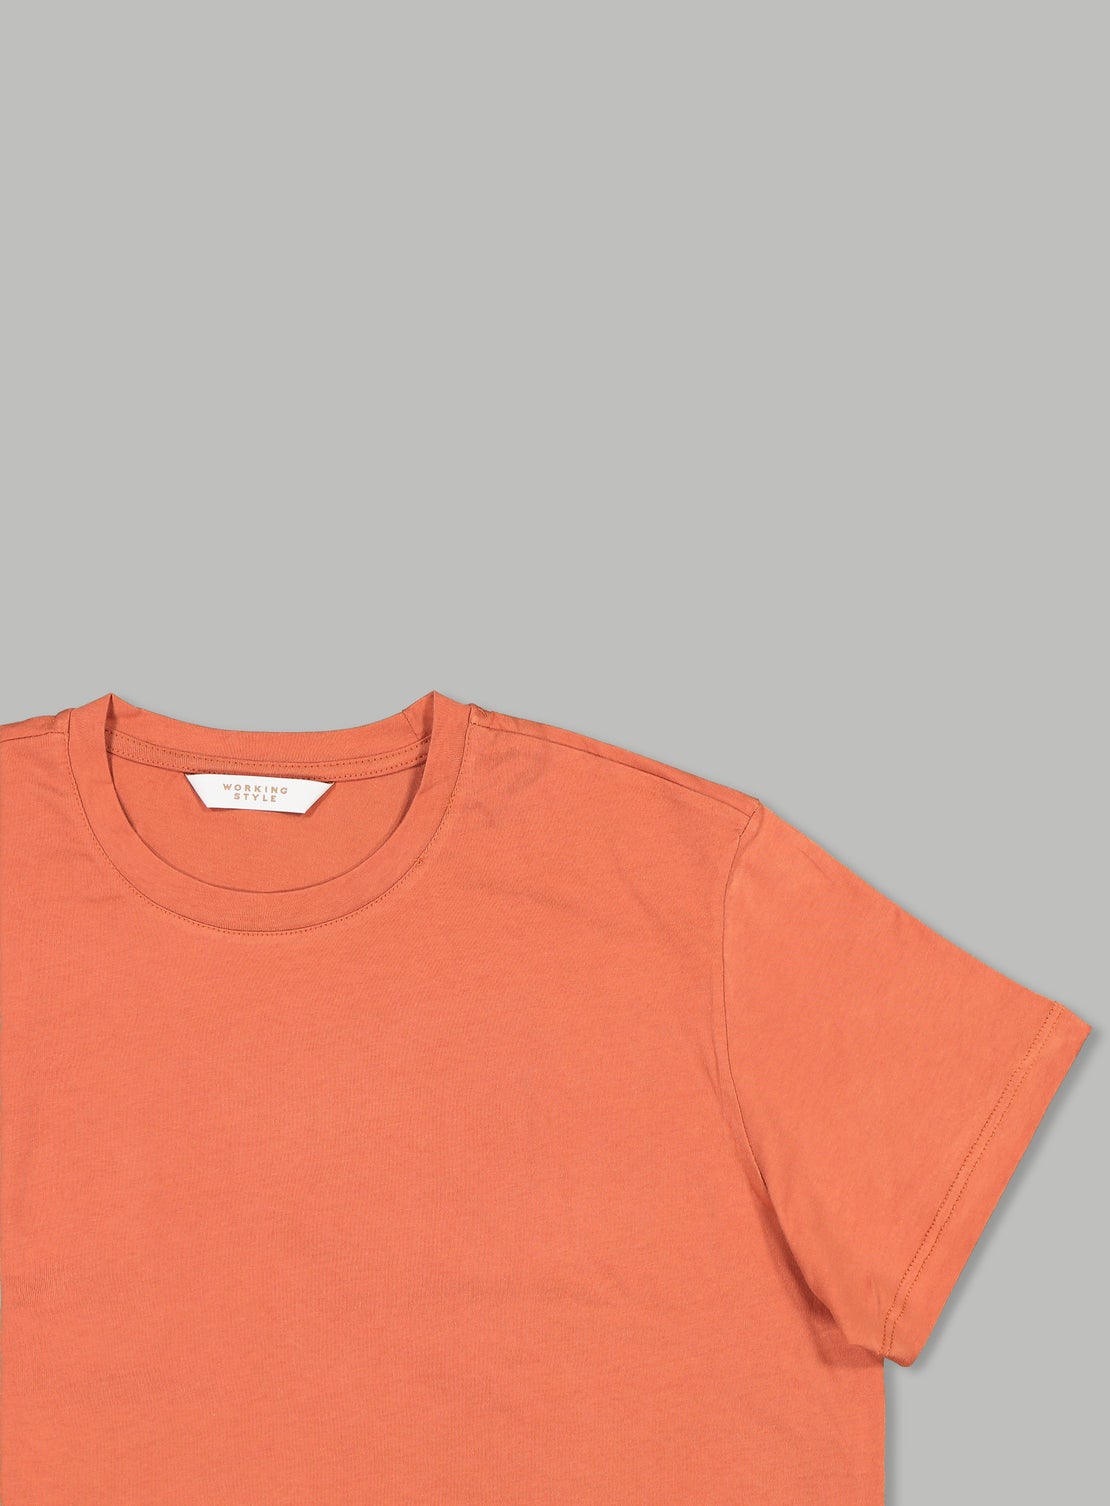 Benny Orange T-Shirt